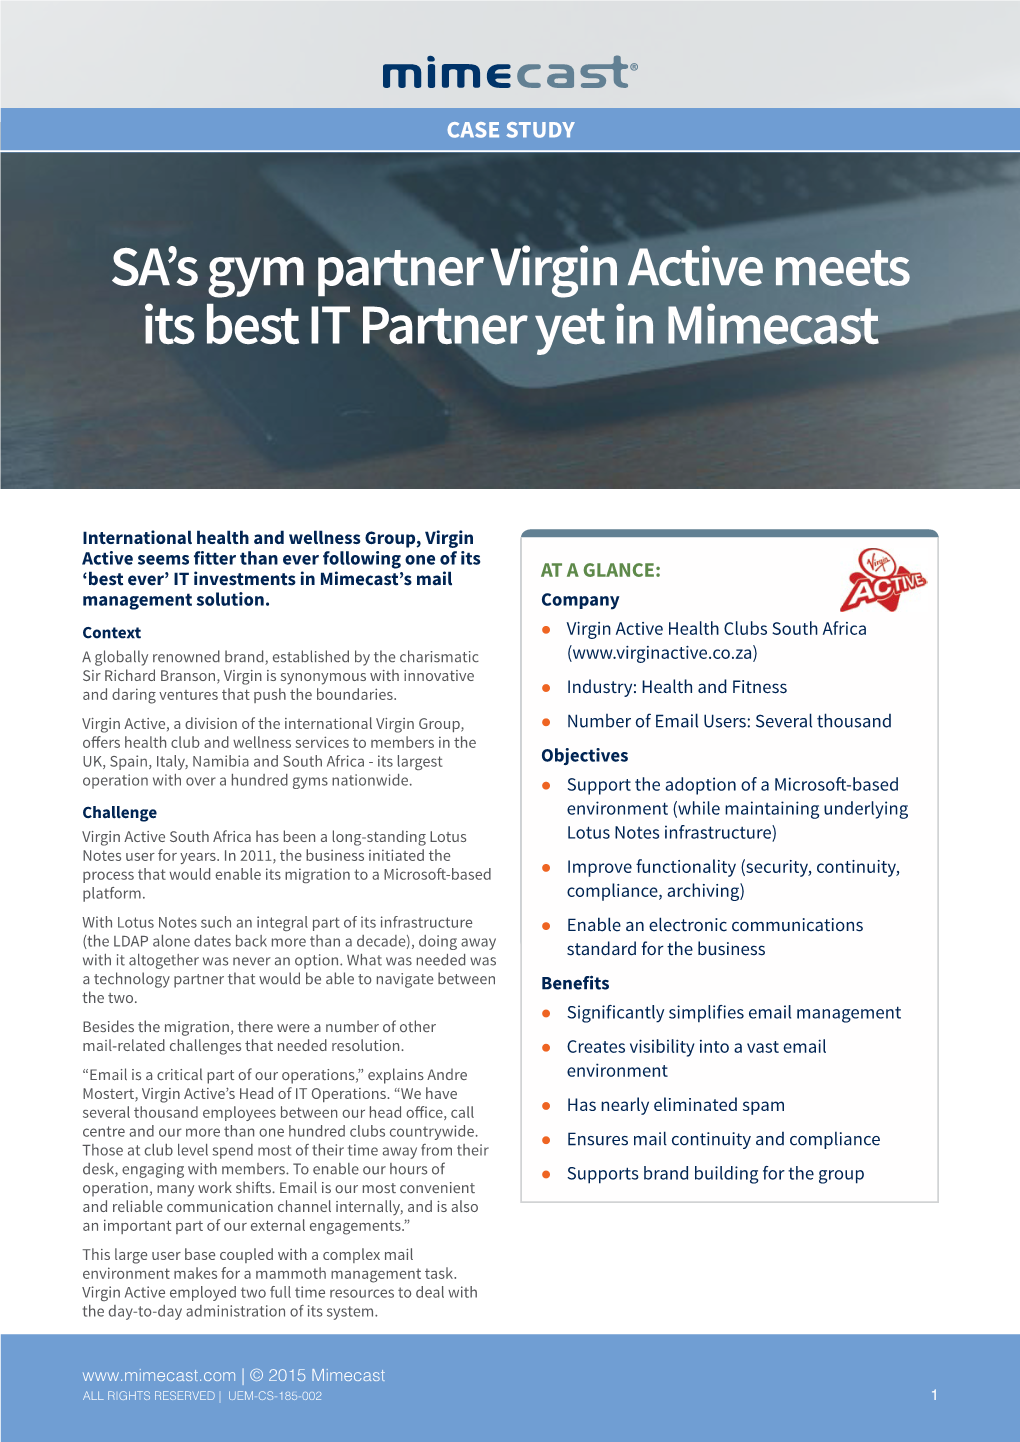 SA's Gym Partner Virgin Active Meets Its Best IT Partner Yet in Mimecast